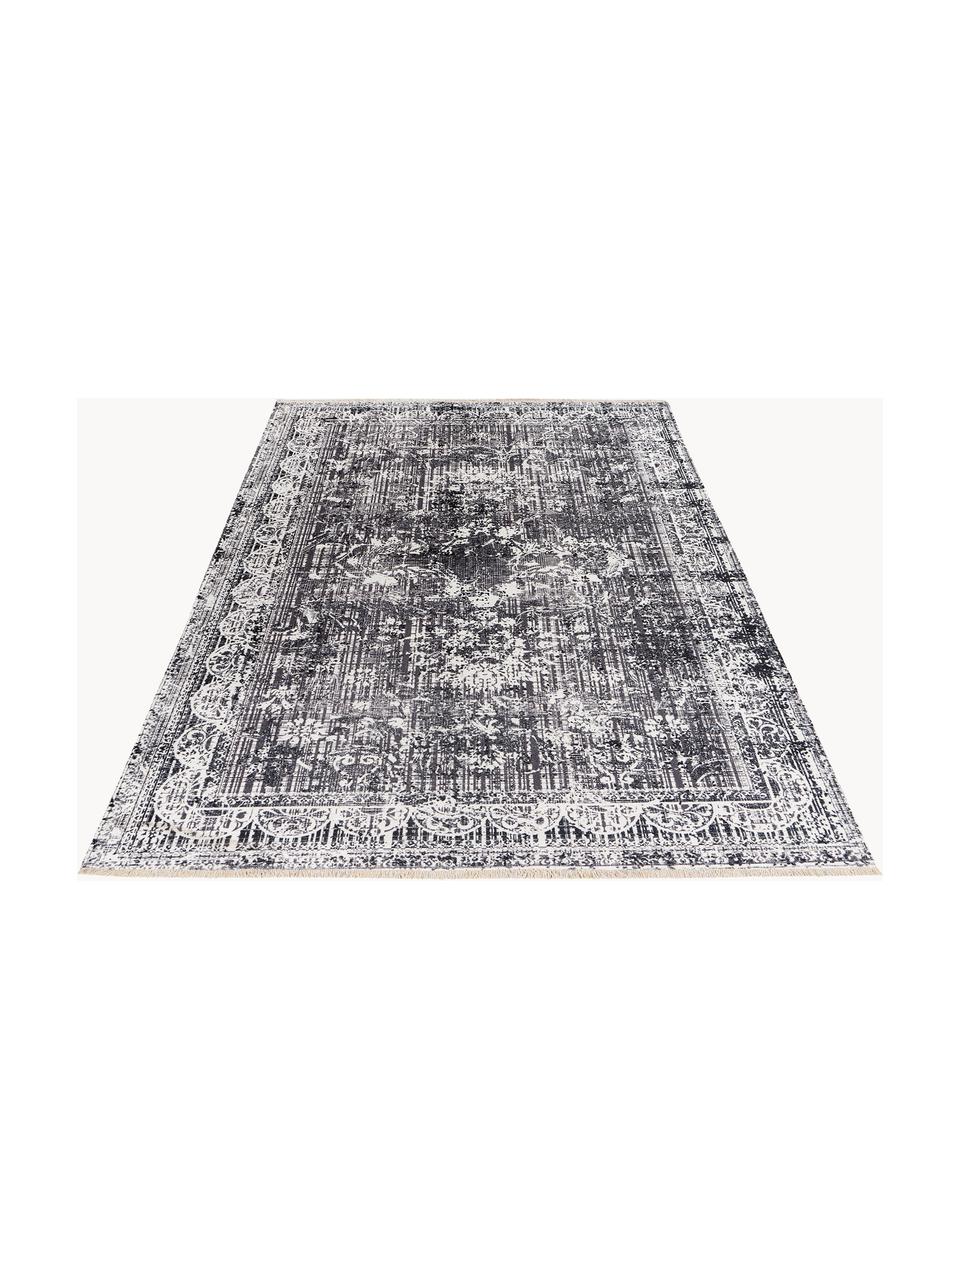 Interiérový a exteriérový koberec s třásněmi Valencia, 100 % polyester, Odstíny šedé, Š 80 cm, D 150 cm (velikost XS)